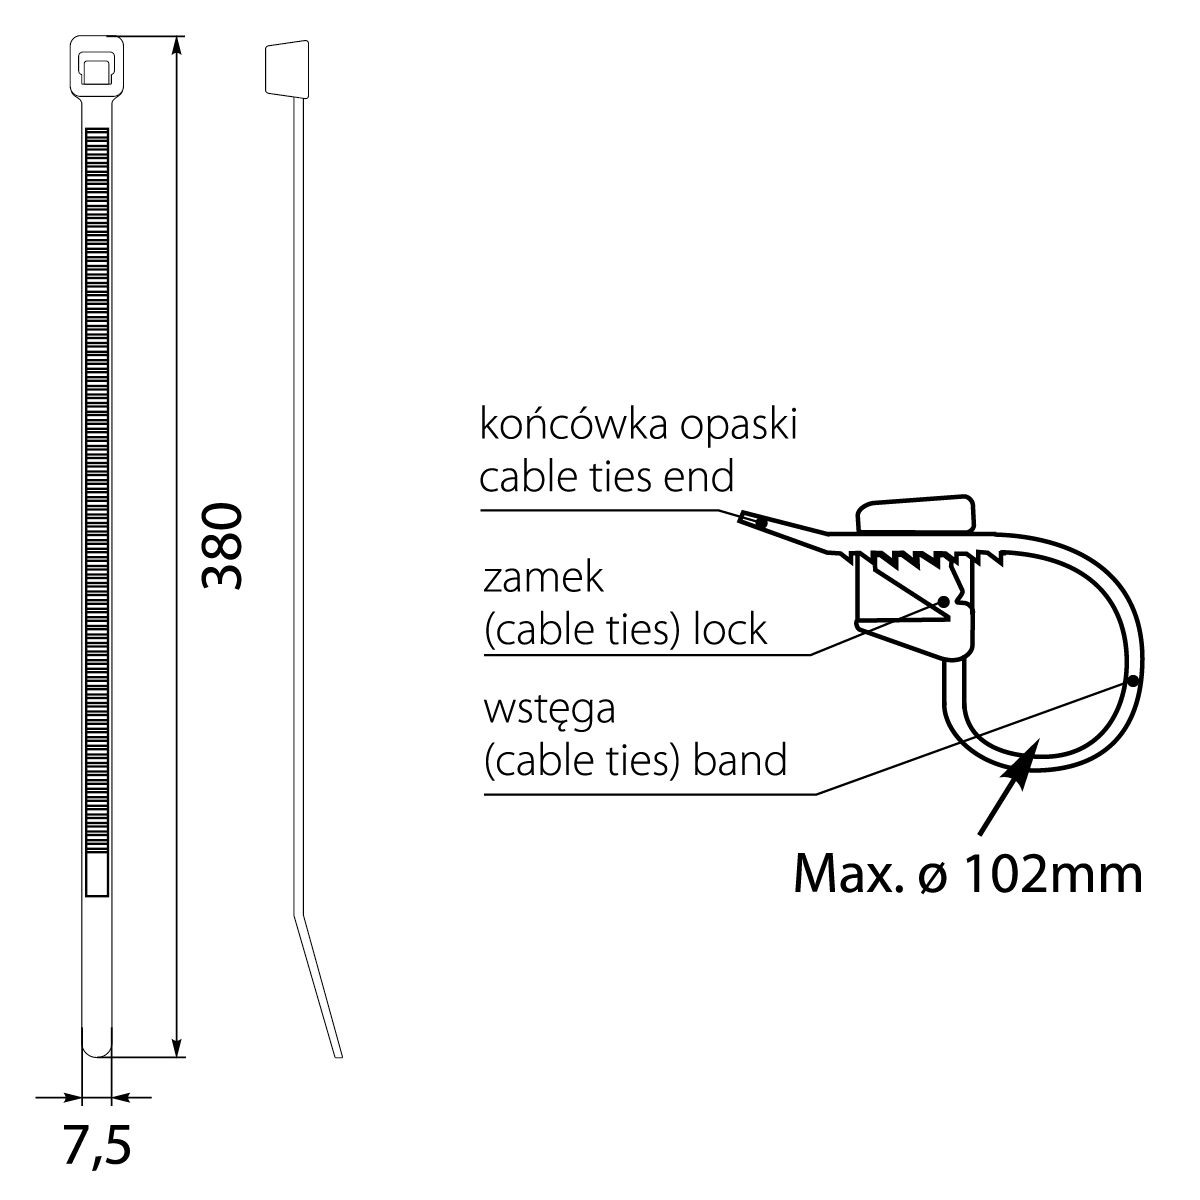 Opaska Zaciskowa czarna OZC 75-380 UV, 7.5x380, max. ∅102, 540N,elektro-plast